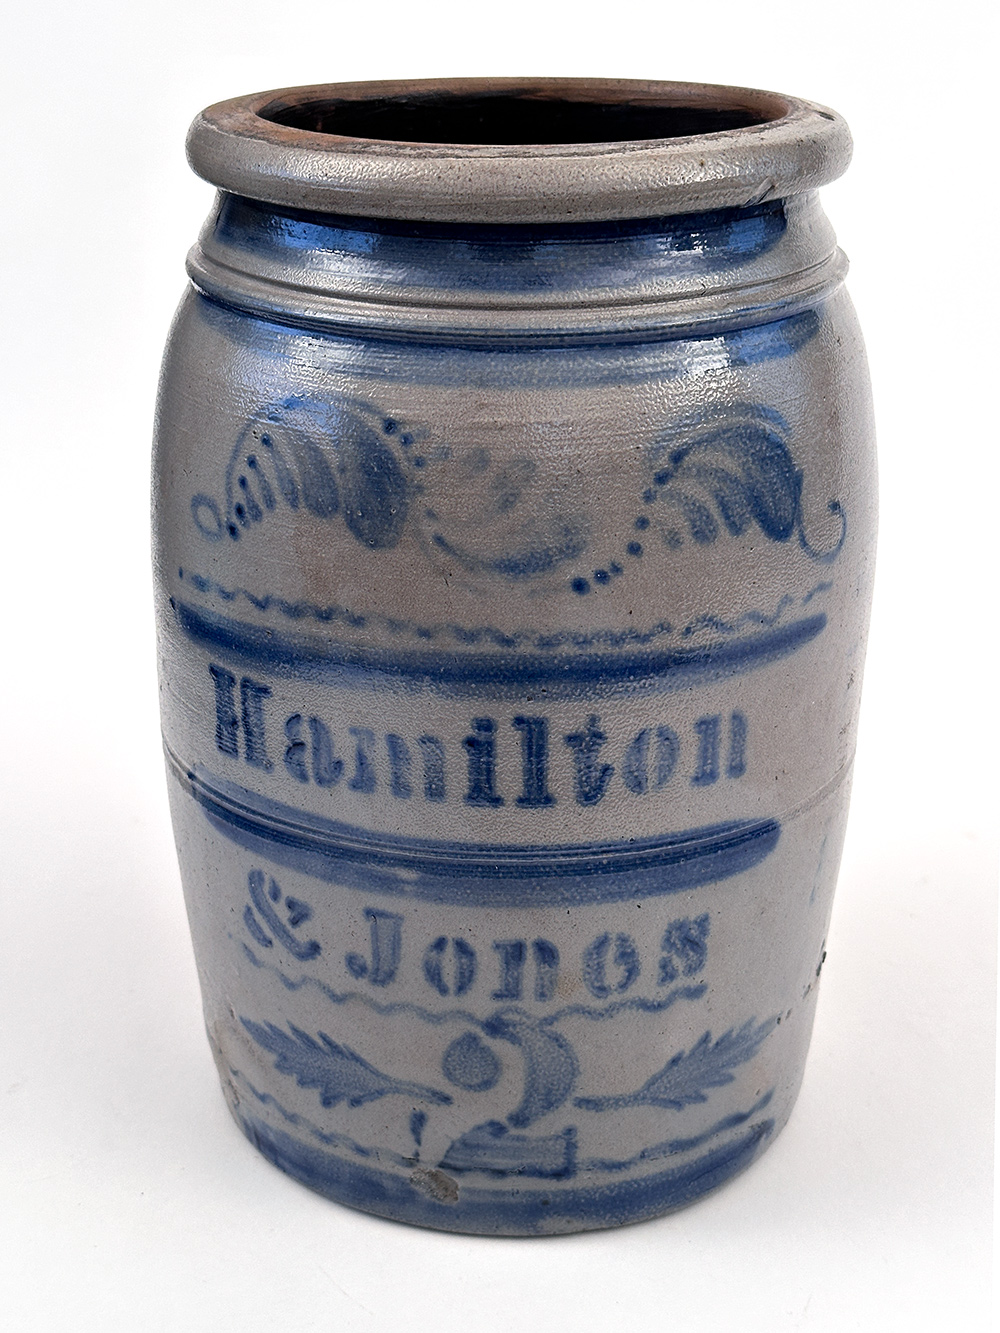 hamilton and jones blue decorated greensboro pennsylvania stoneware crock